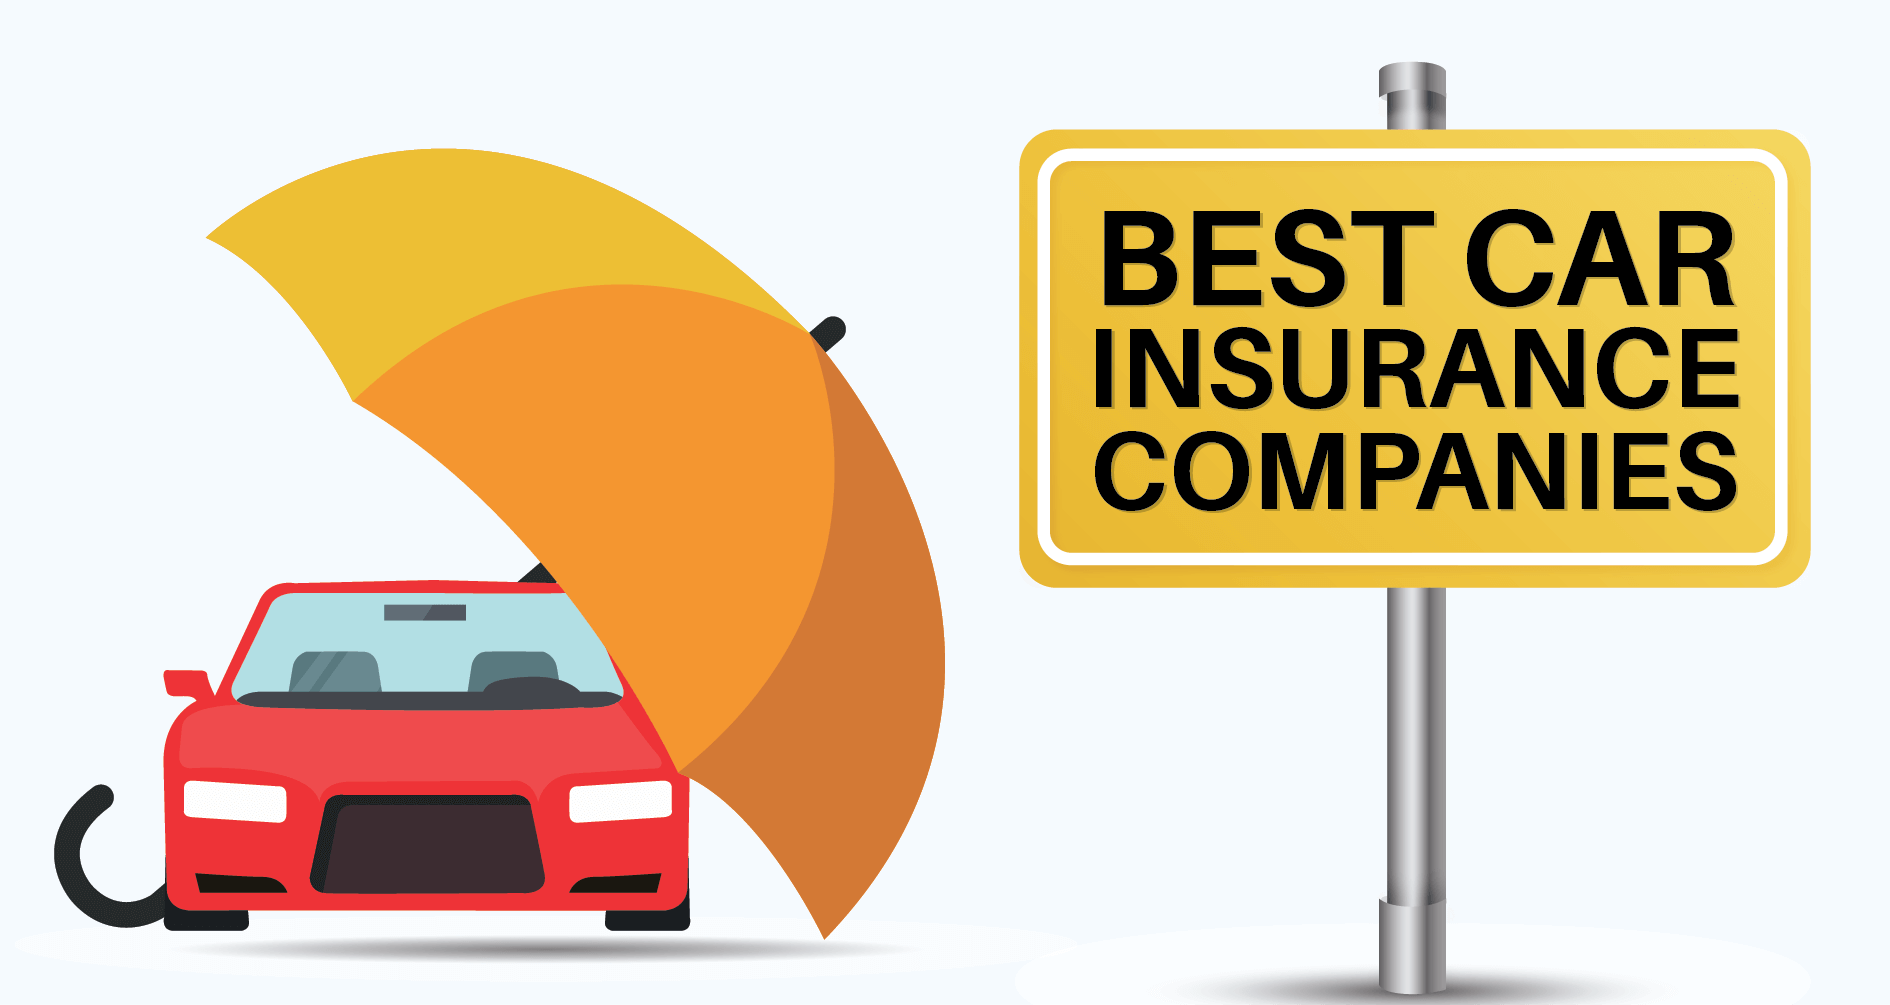 Best Car Insurance Companies of 2023